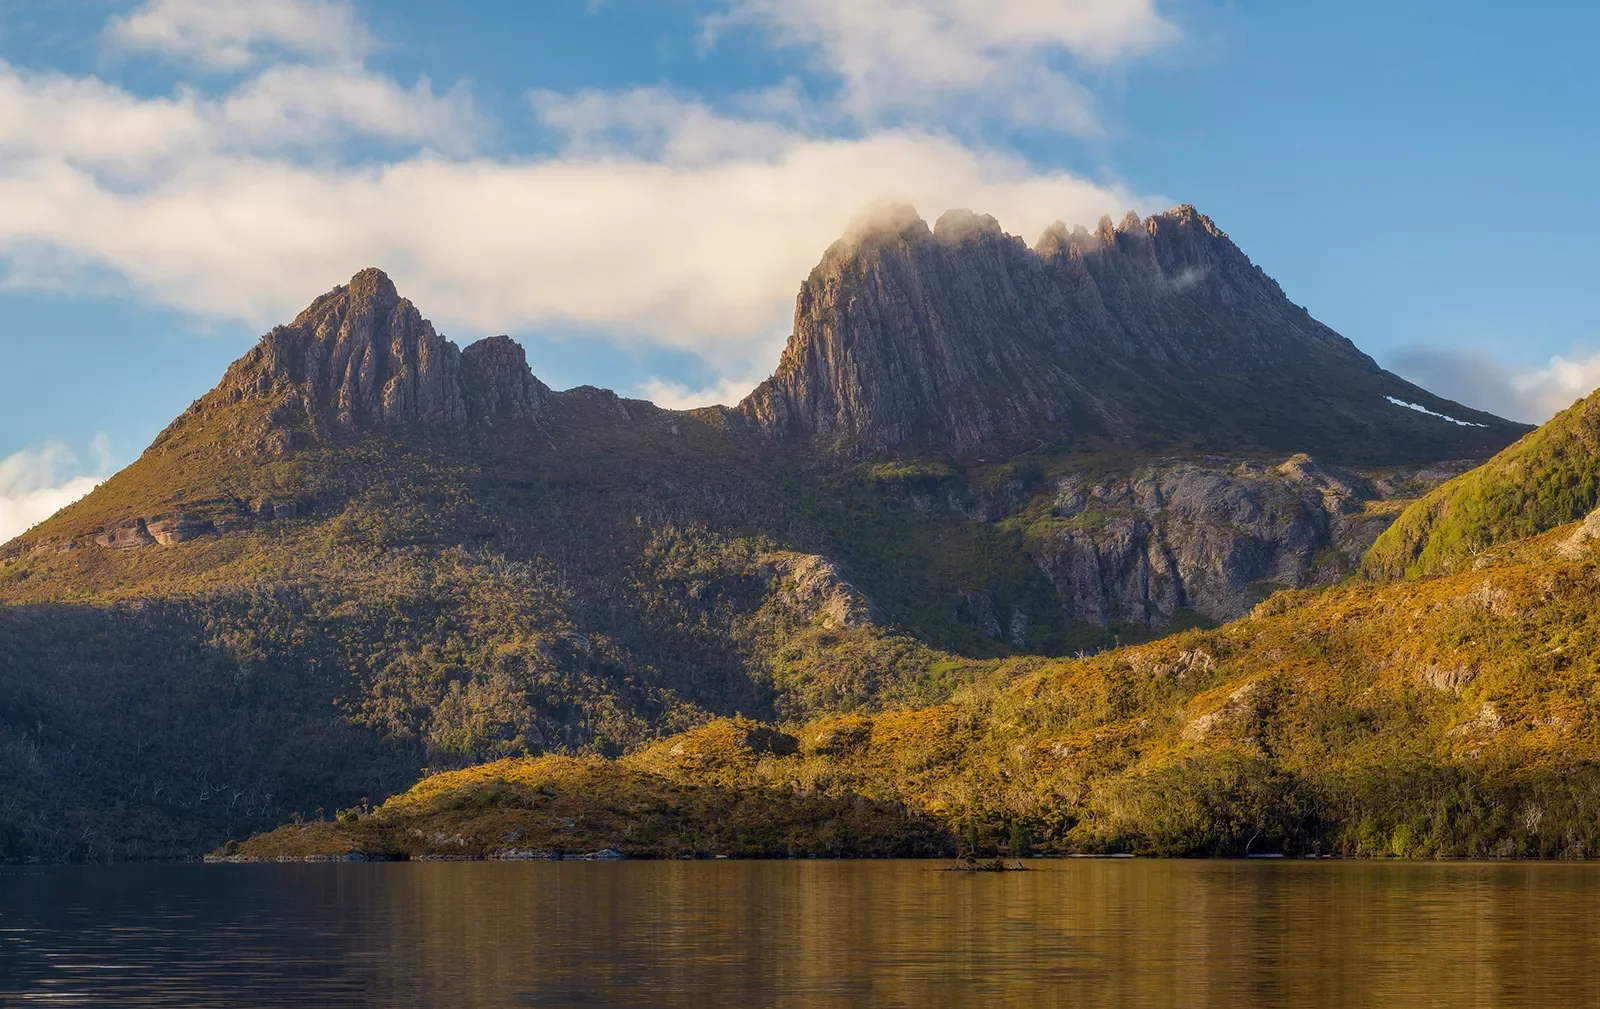 Panorama image of Cradle Mountain, Tasmania, Australia.